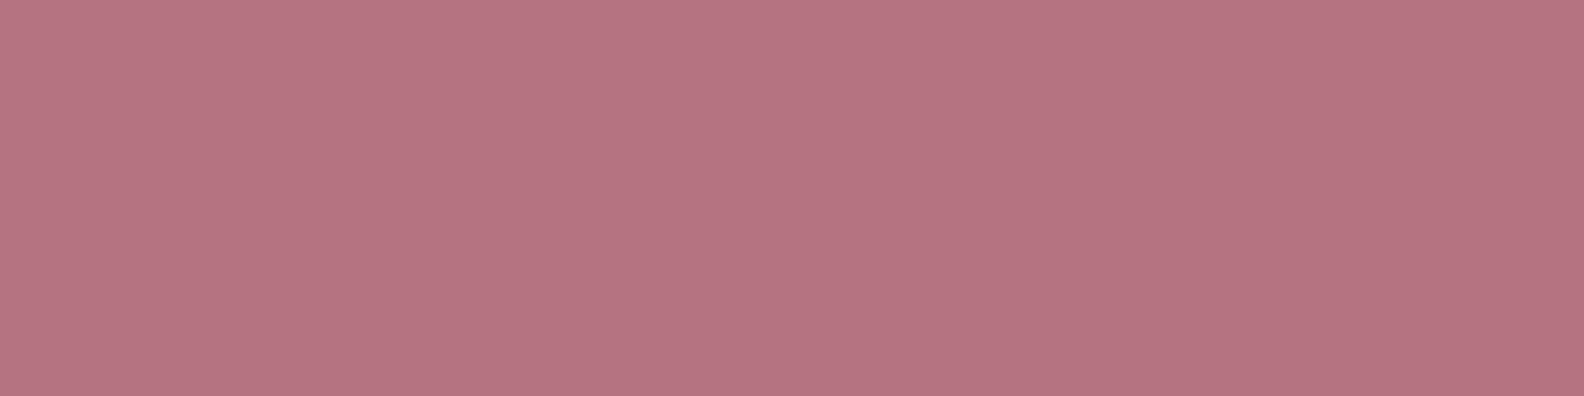 1584x396 Turkish Rose Solid Color Background